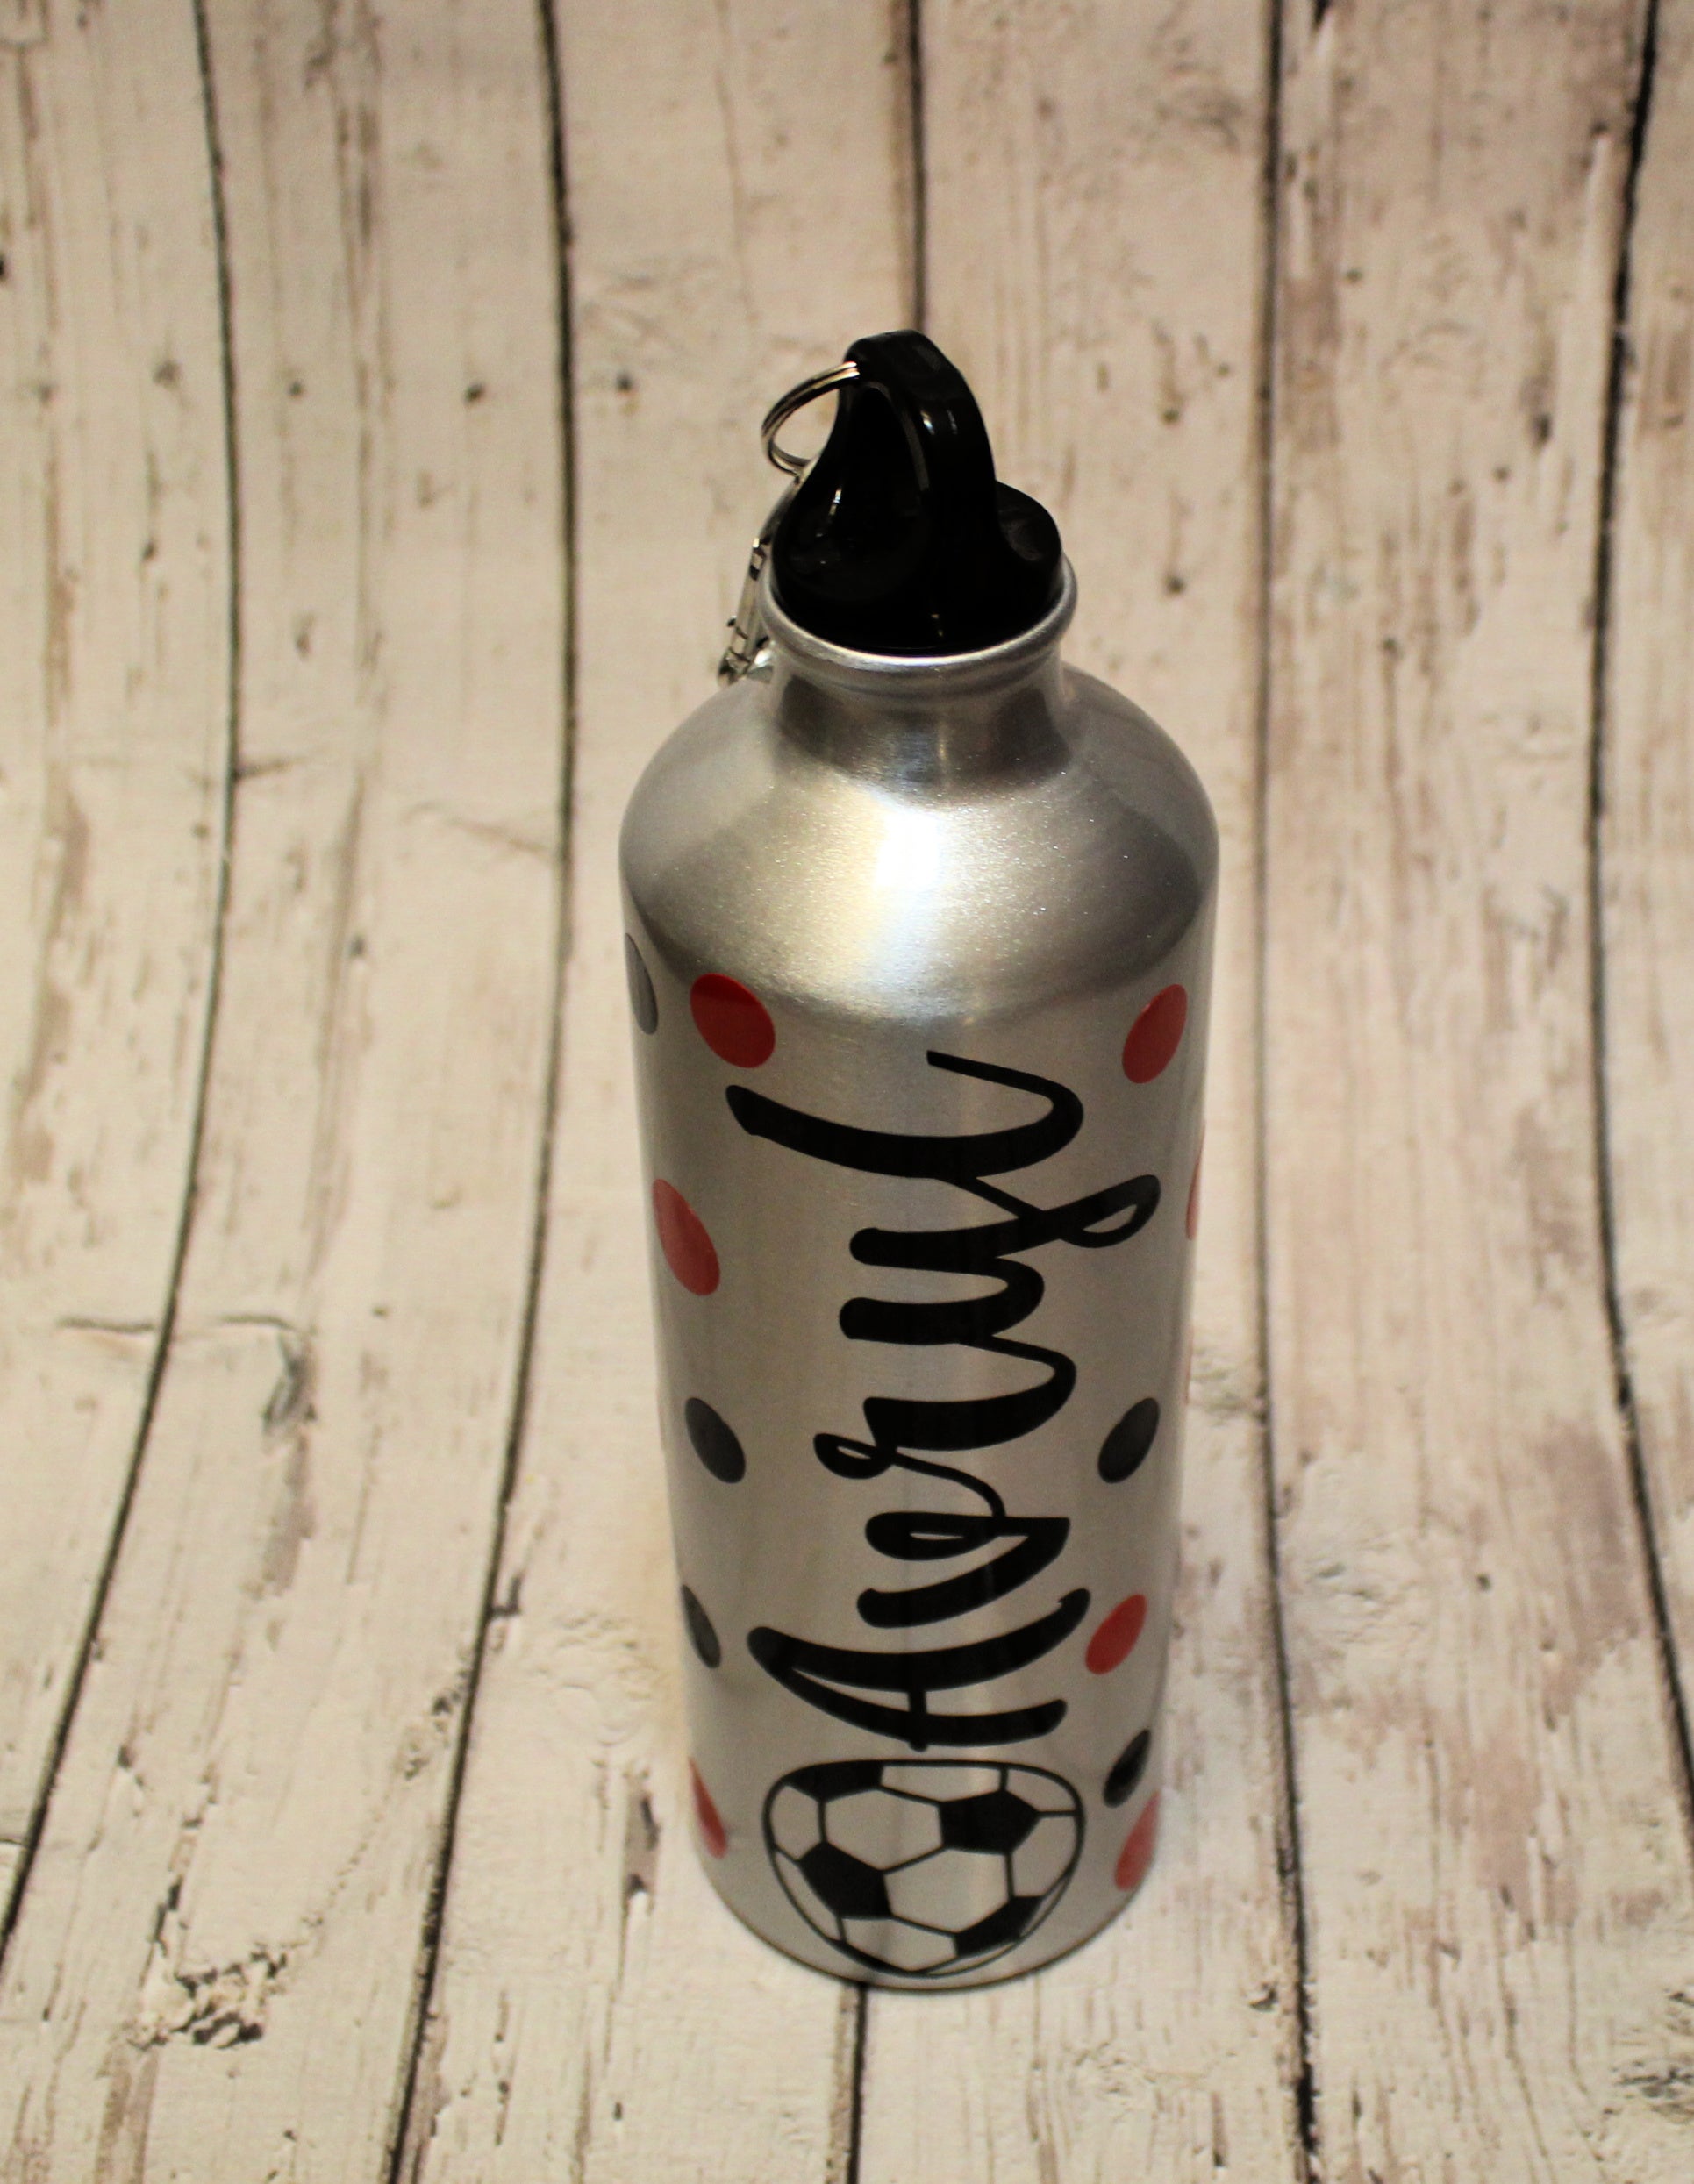 Soccer Water Bottle - Aluminum Water Bottle